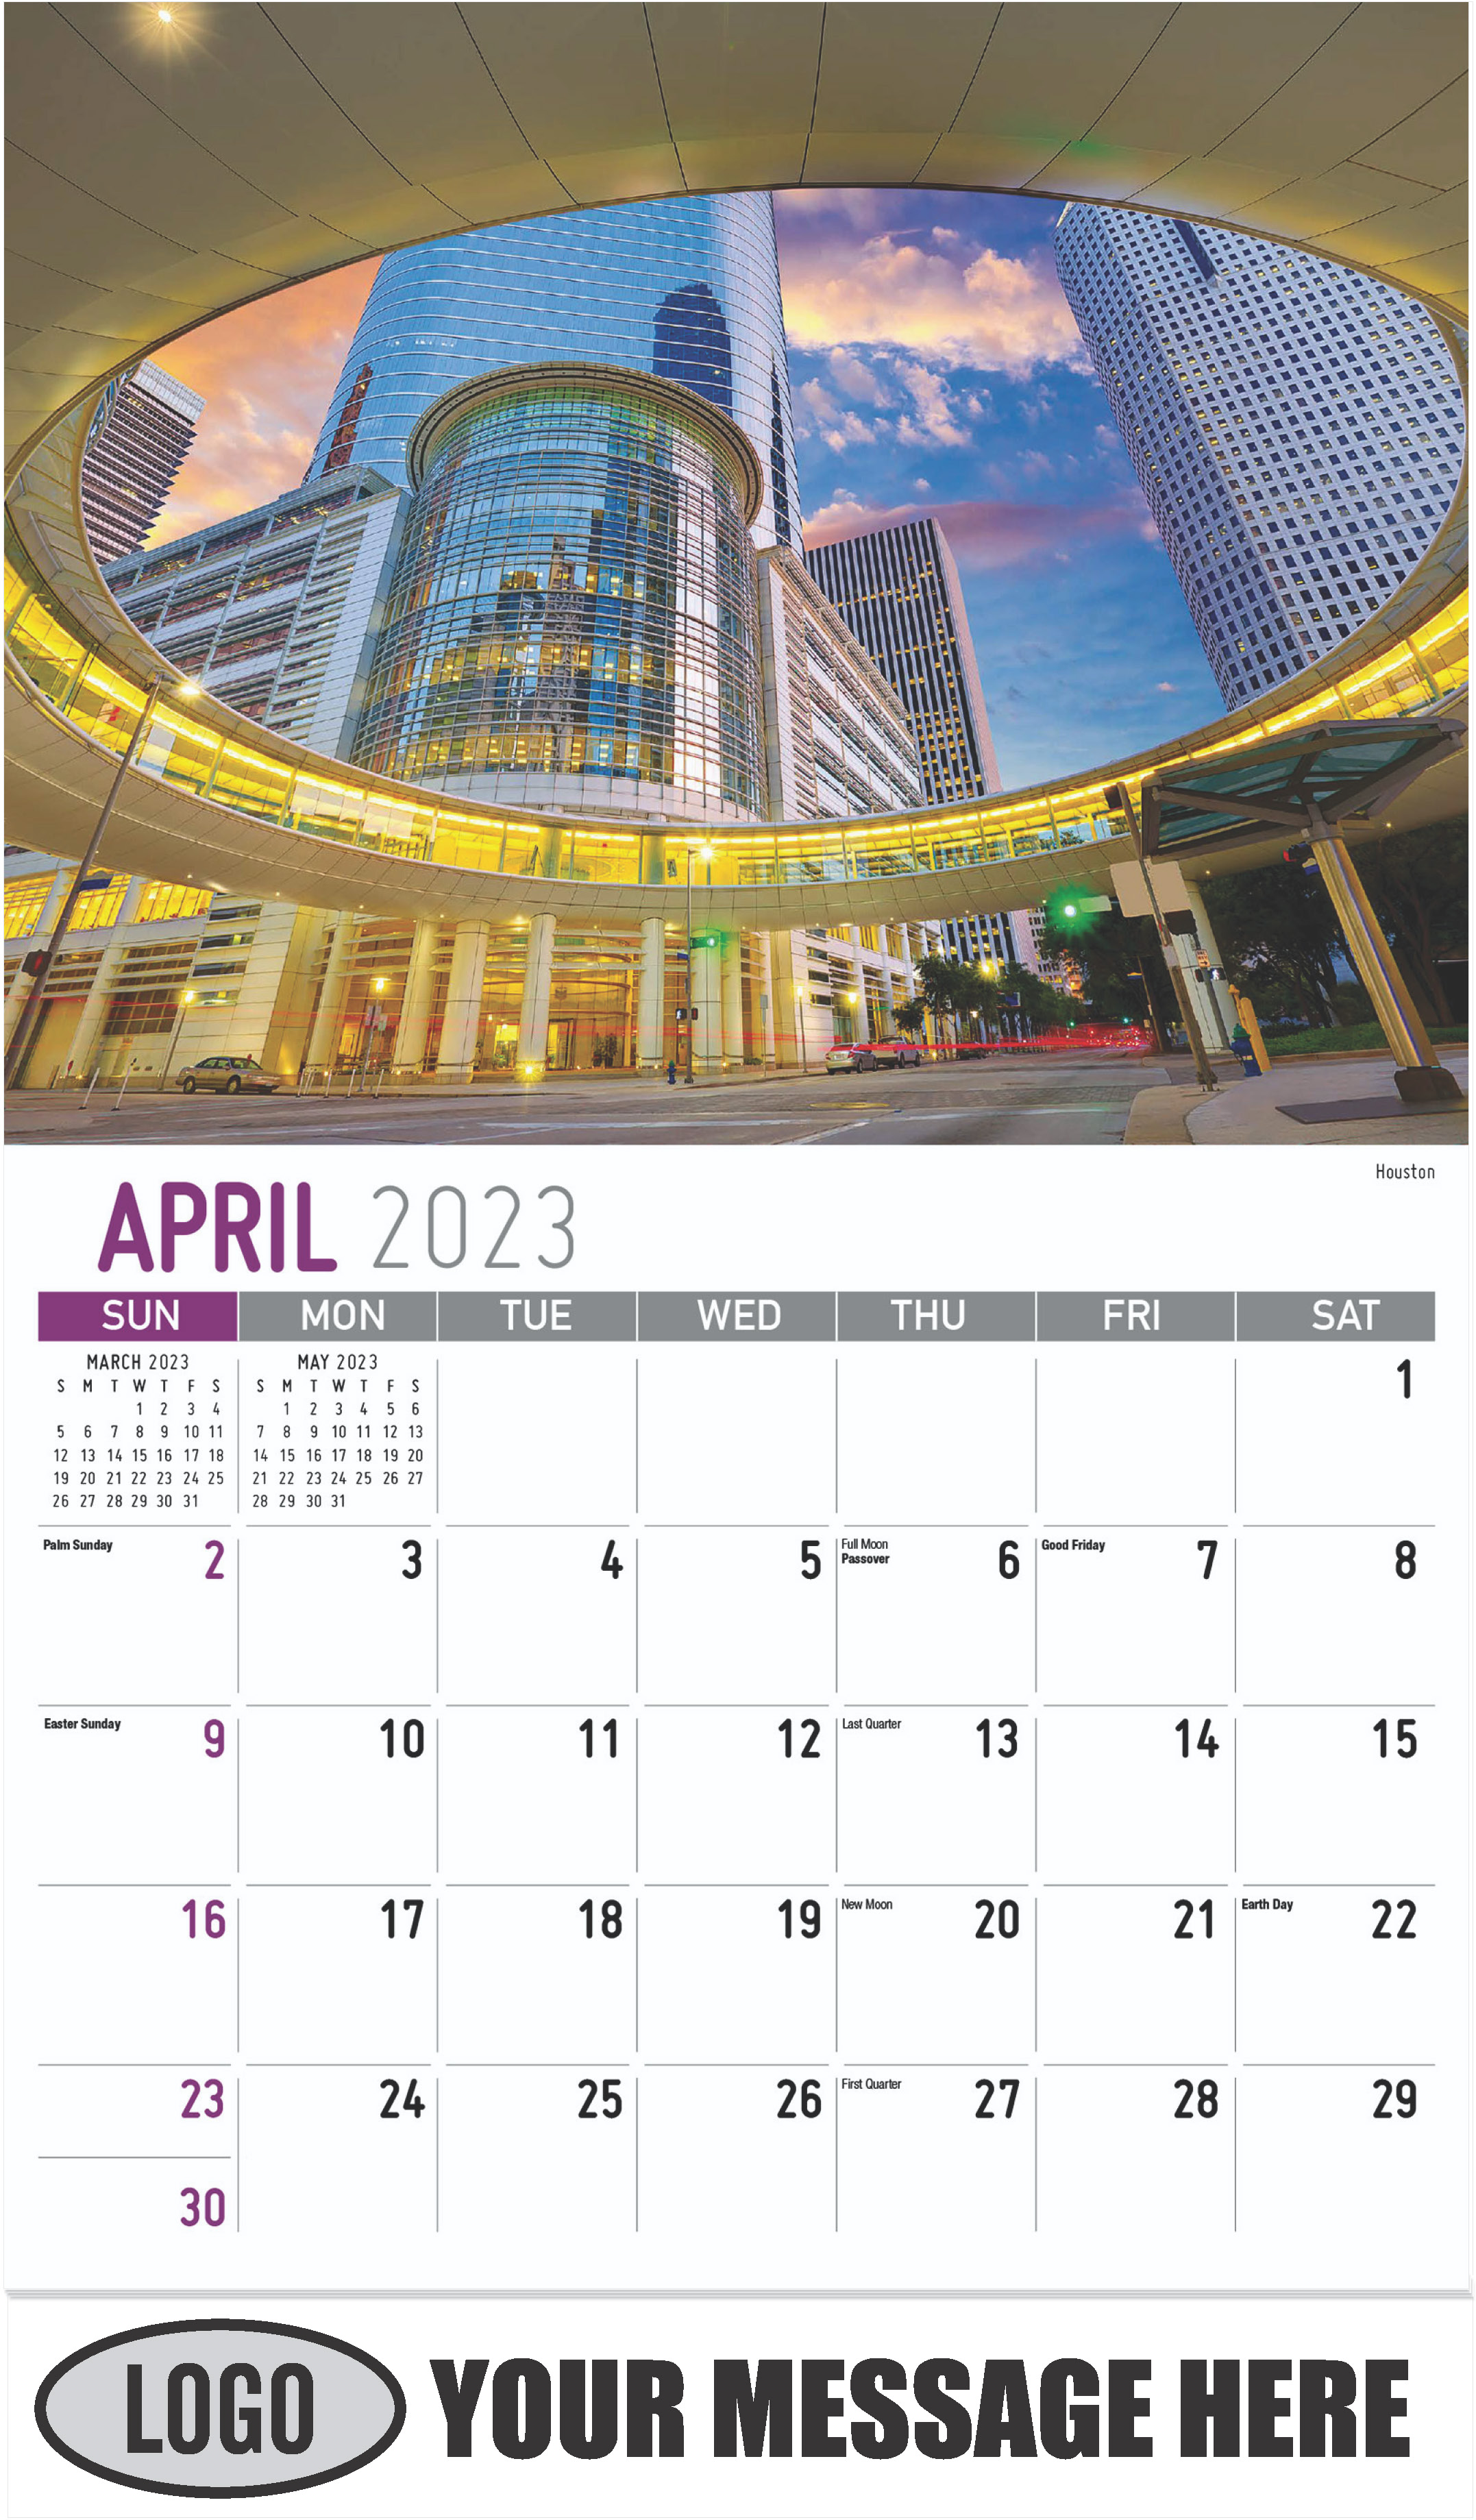 Houston - April - Scenes of Texas 2023 Promotional Calendar